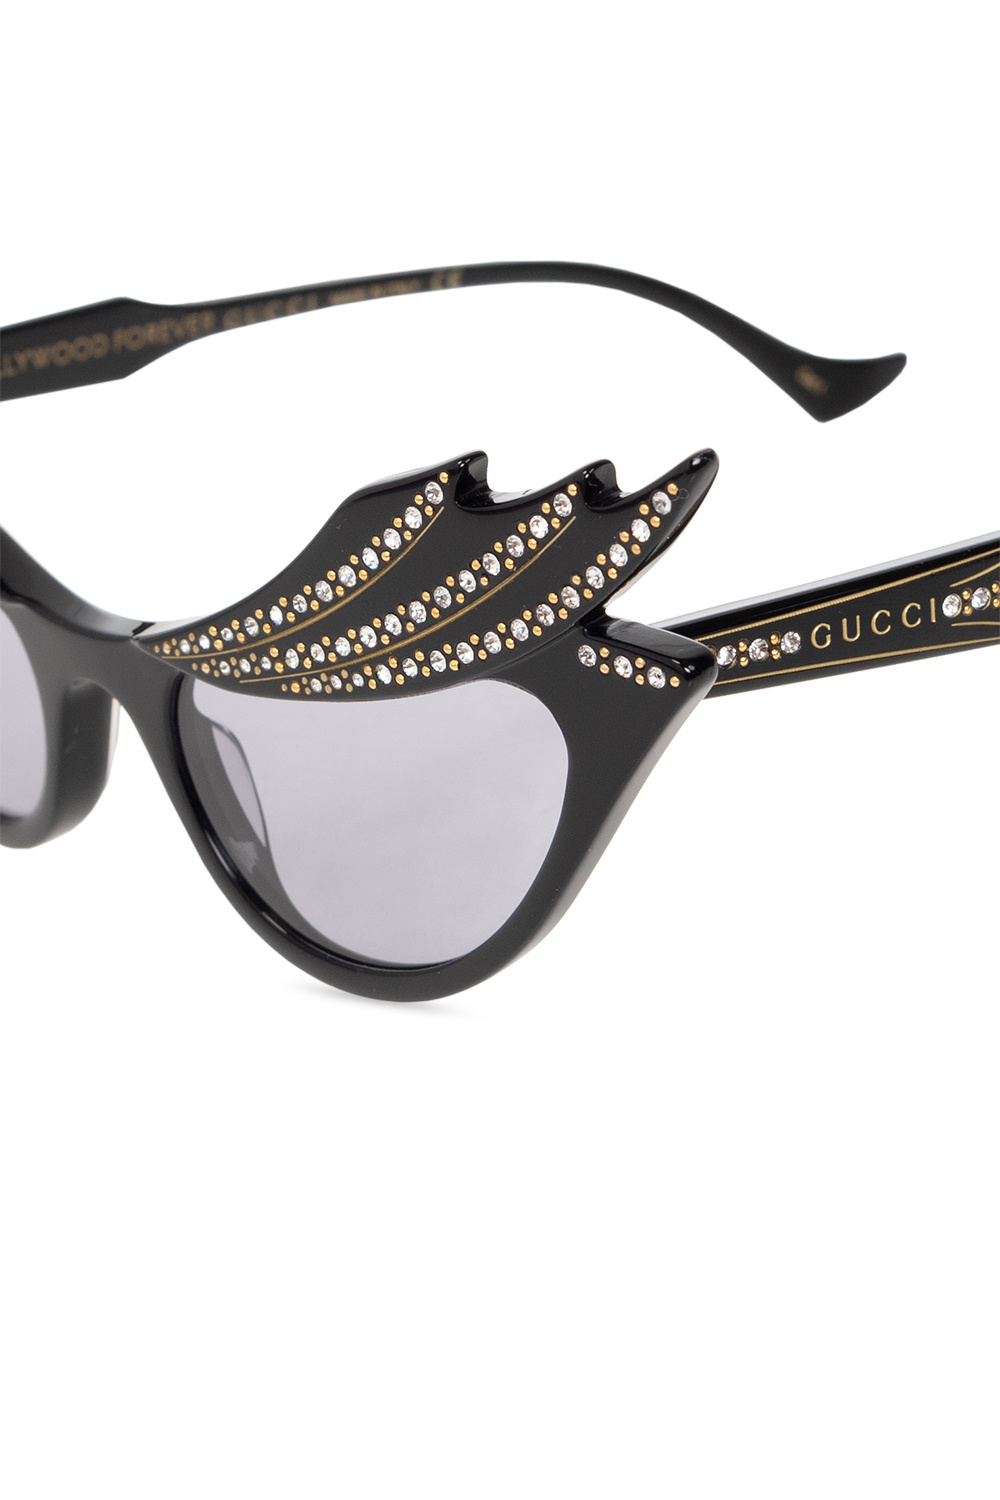 Gucci Eyewear GG cat-eye frame glasses